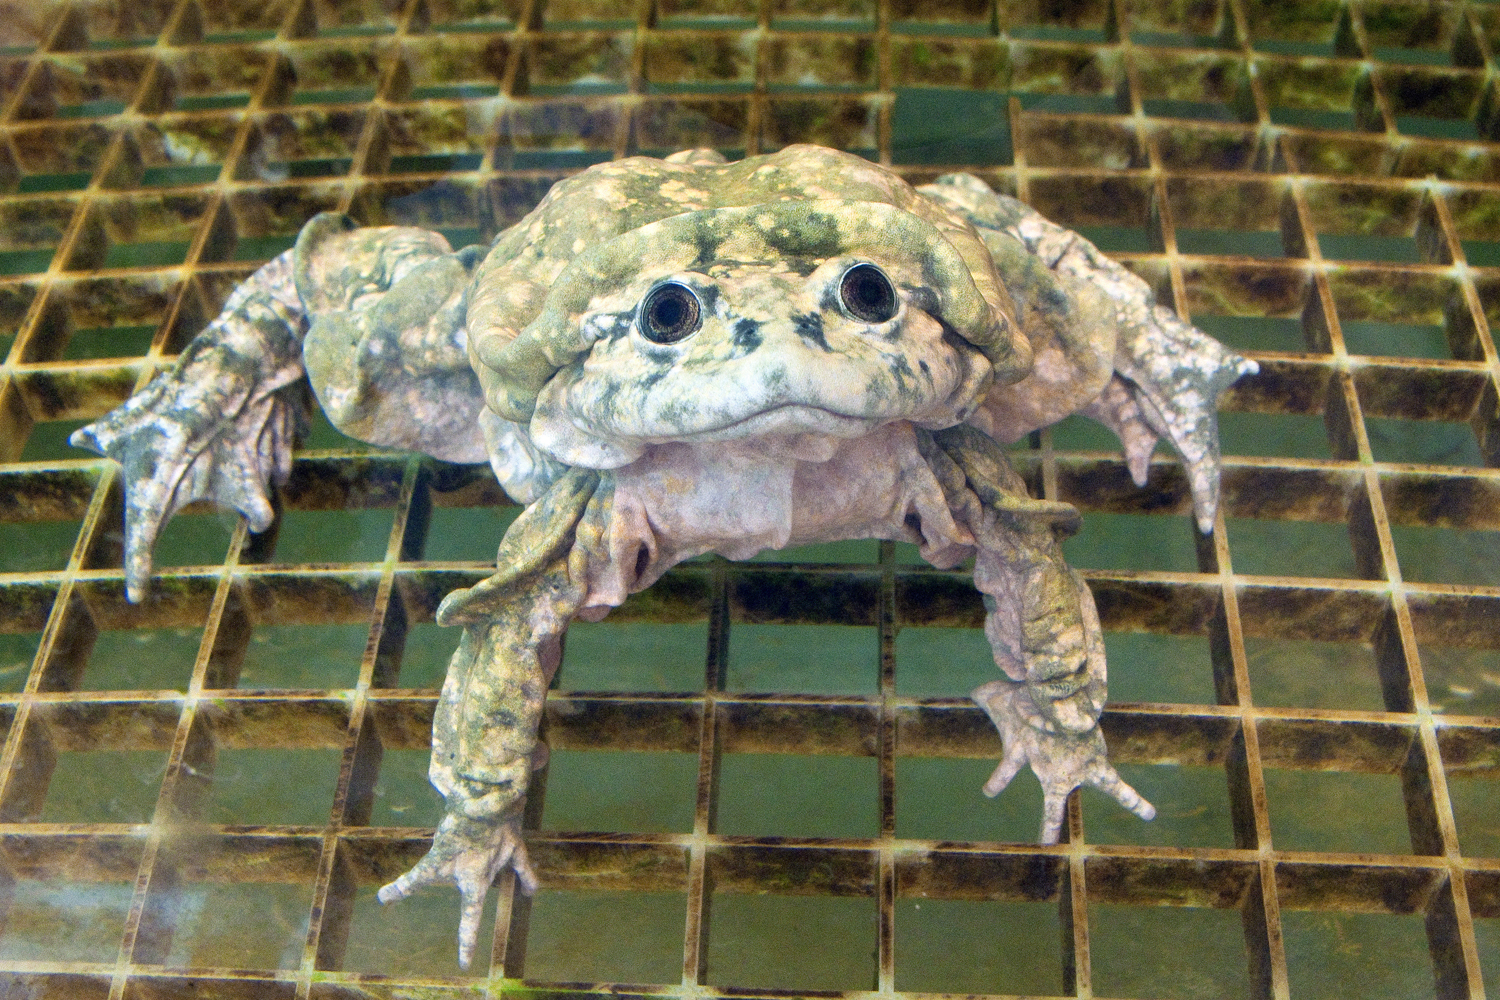 Blobfish declared world's ugliest animal